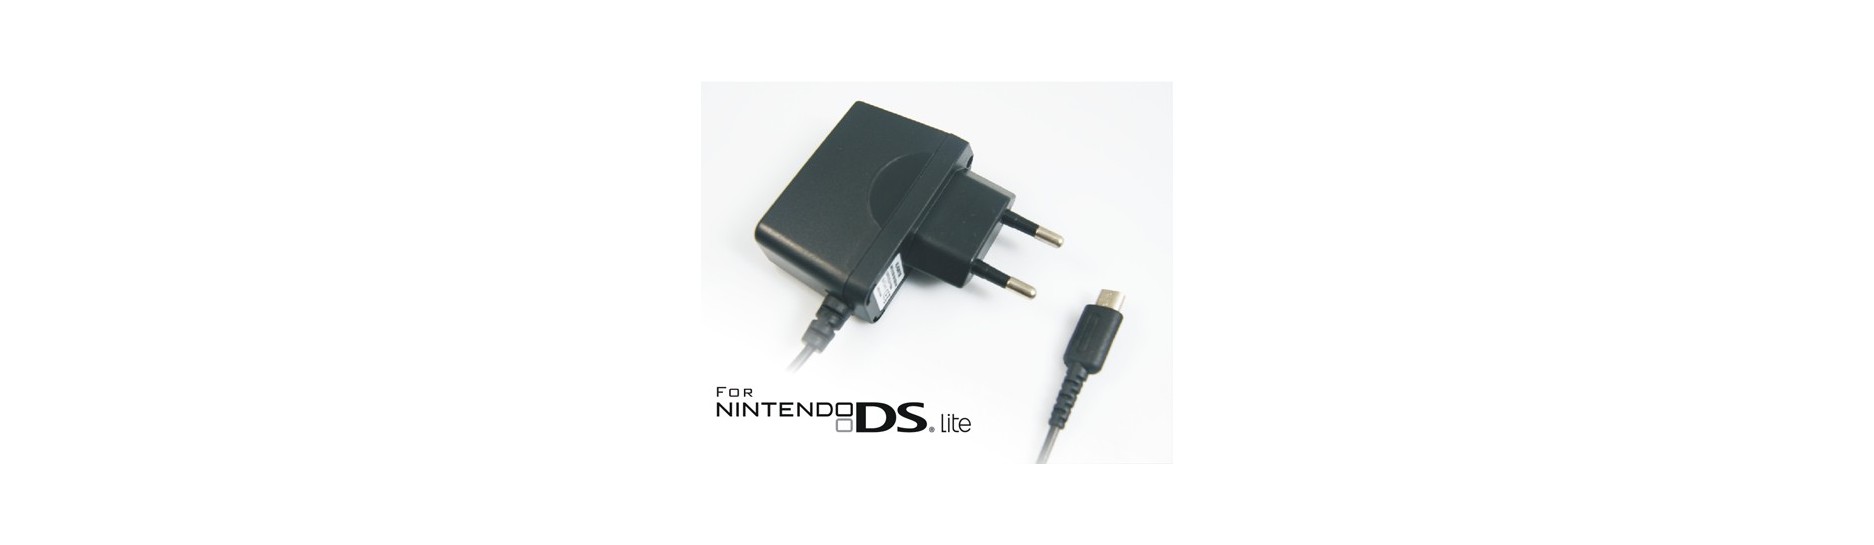 Accesorios Nintendo DS